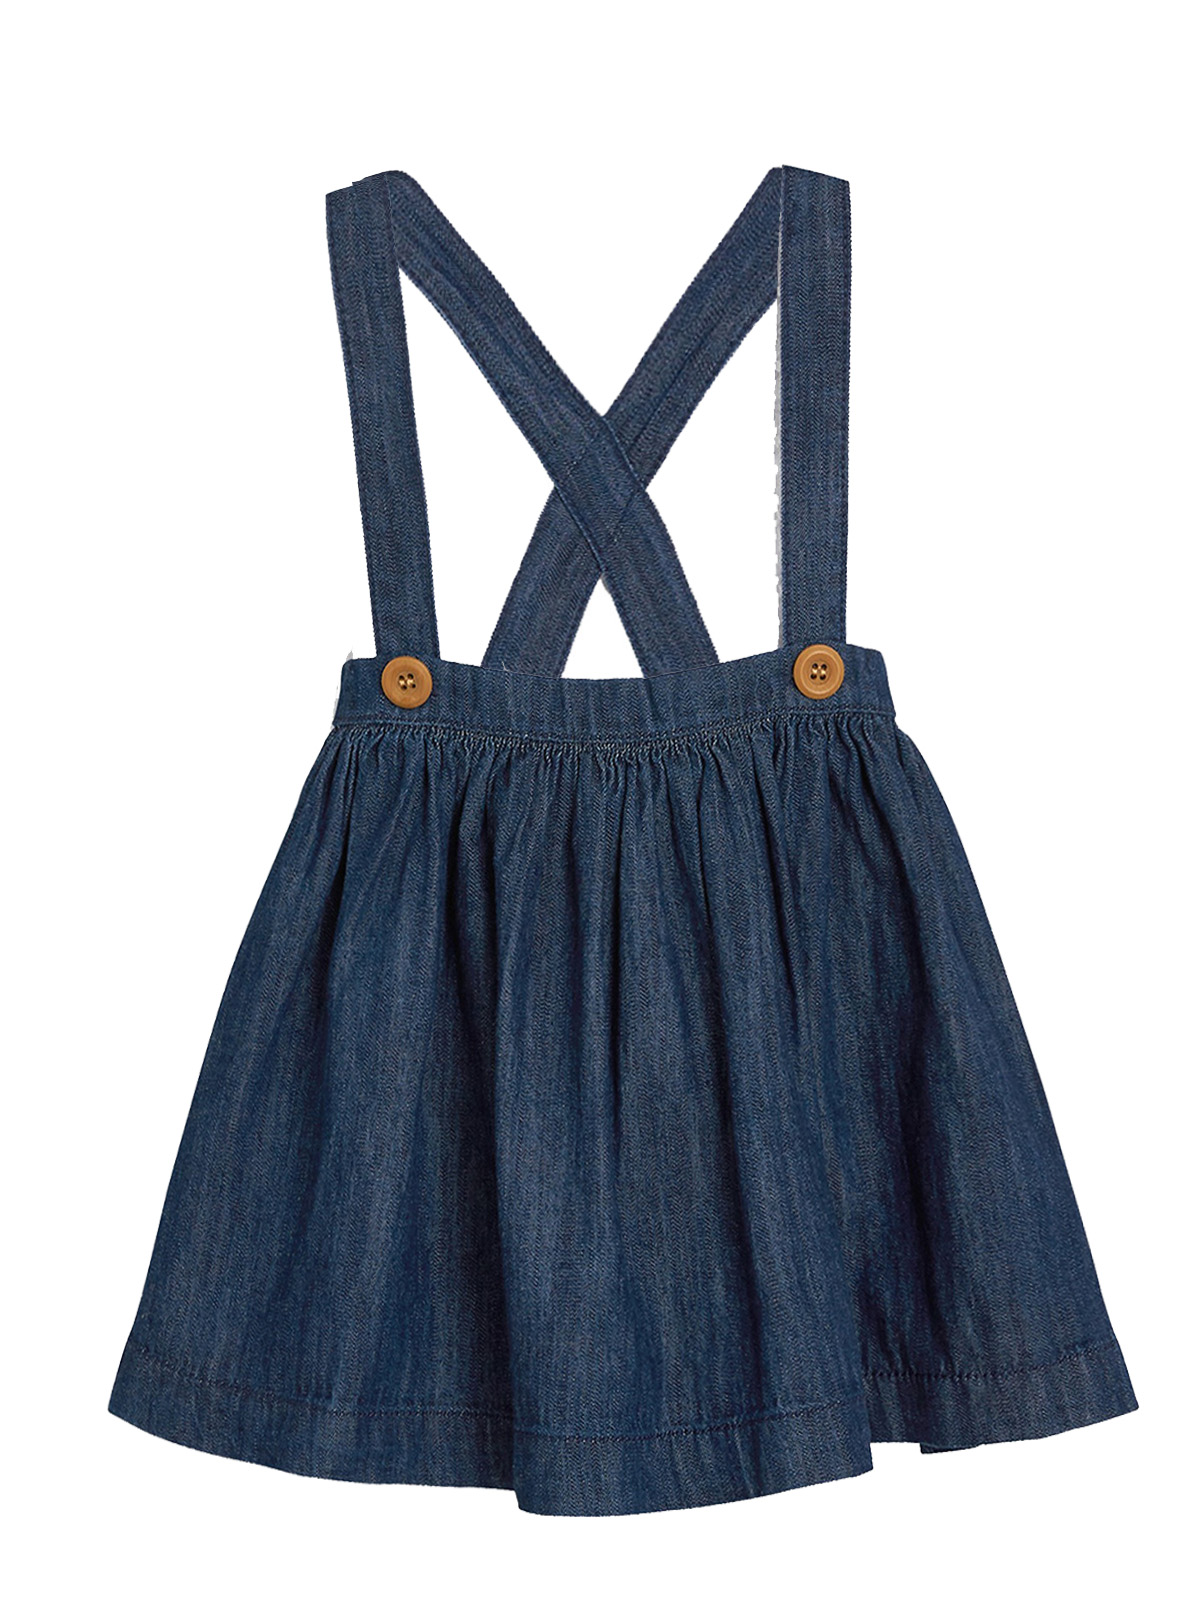 N3XT BLUE Girls Denim Skirt with Braces - Size 6/9M to 4/5yrs